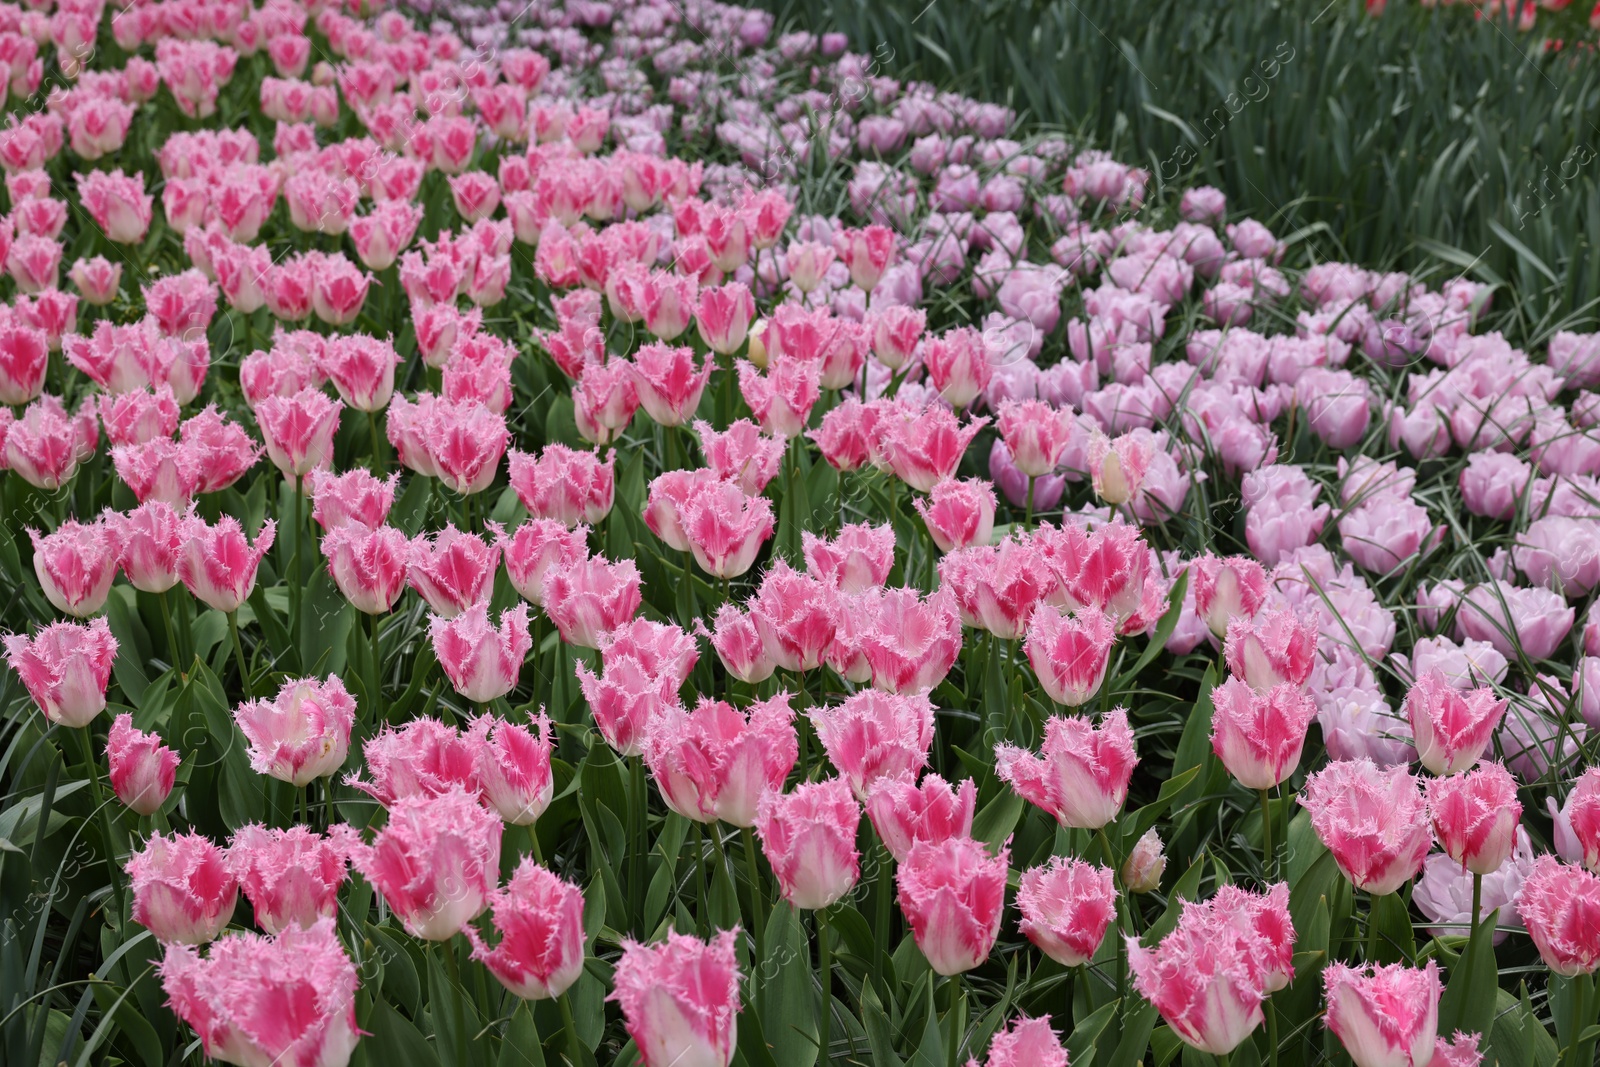 Photo of Many beautiful tulip flowers growing outdoors. Spring season